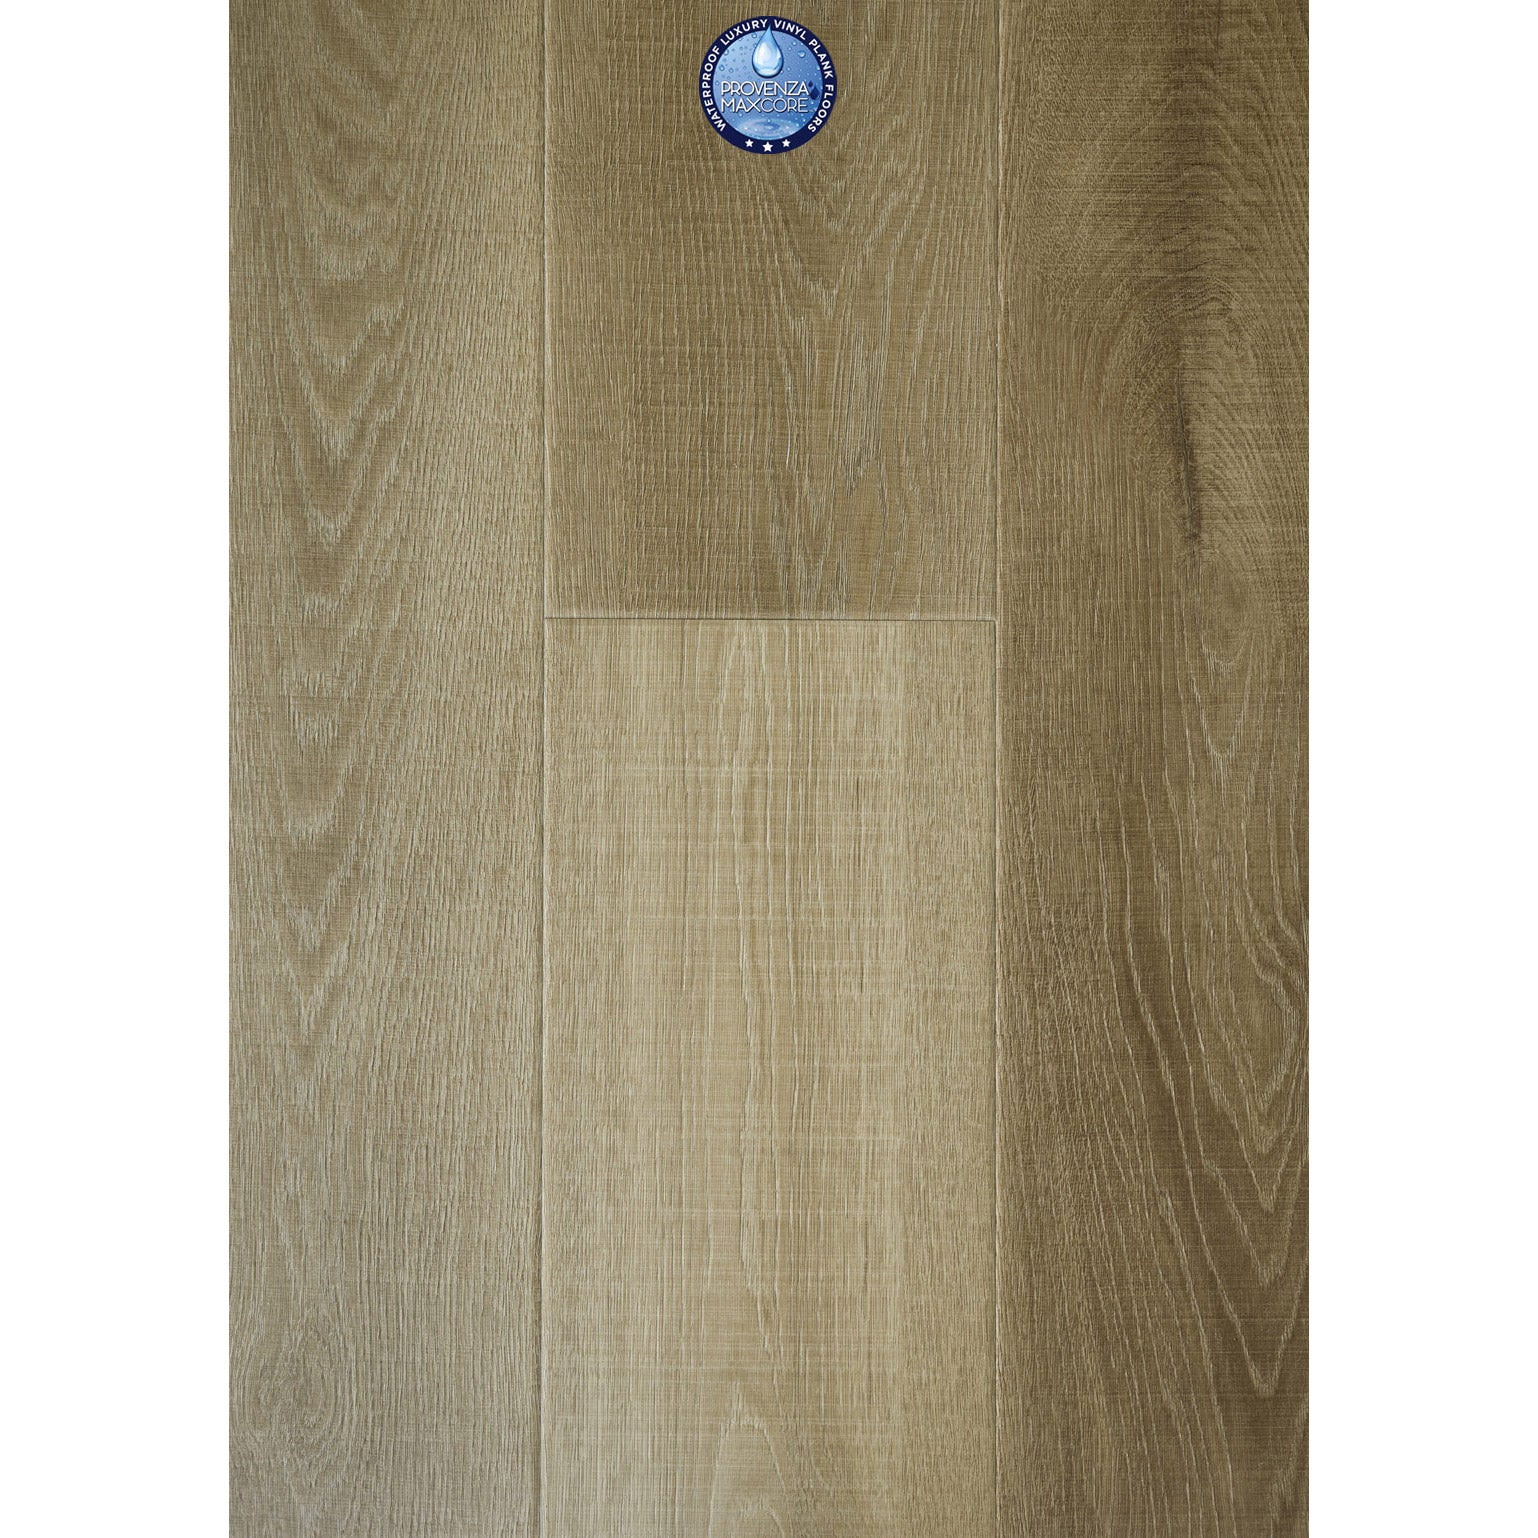 Provenza Floors - New Wave - 8.75 in. x 72 in. Rigid Core - Modern Mink